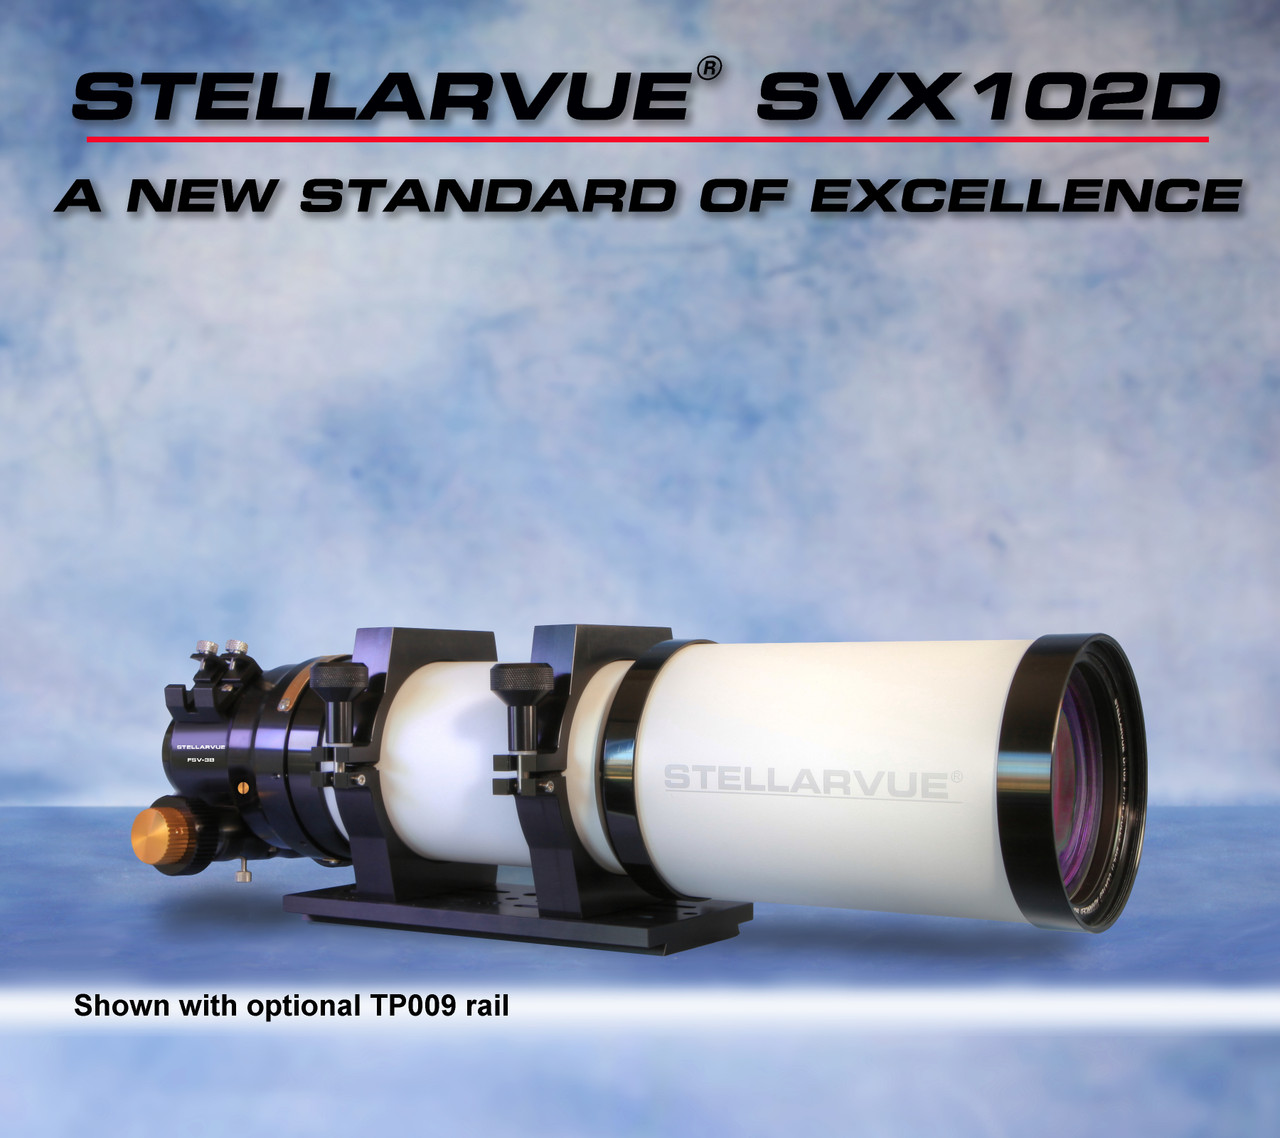 Stellarvue's most economical 4" apo refractor, the SVX102D